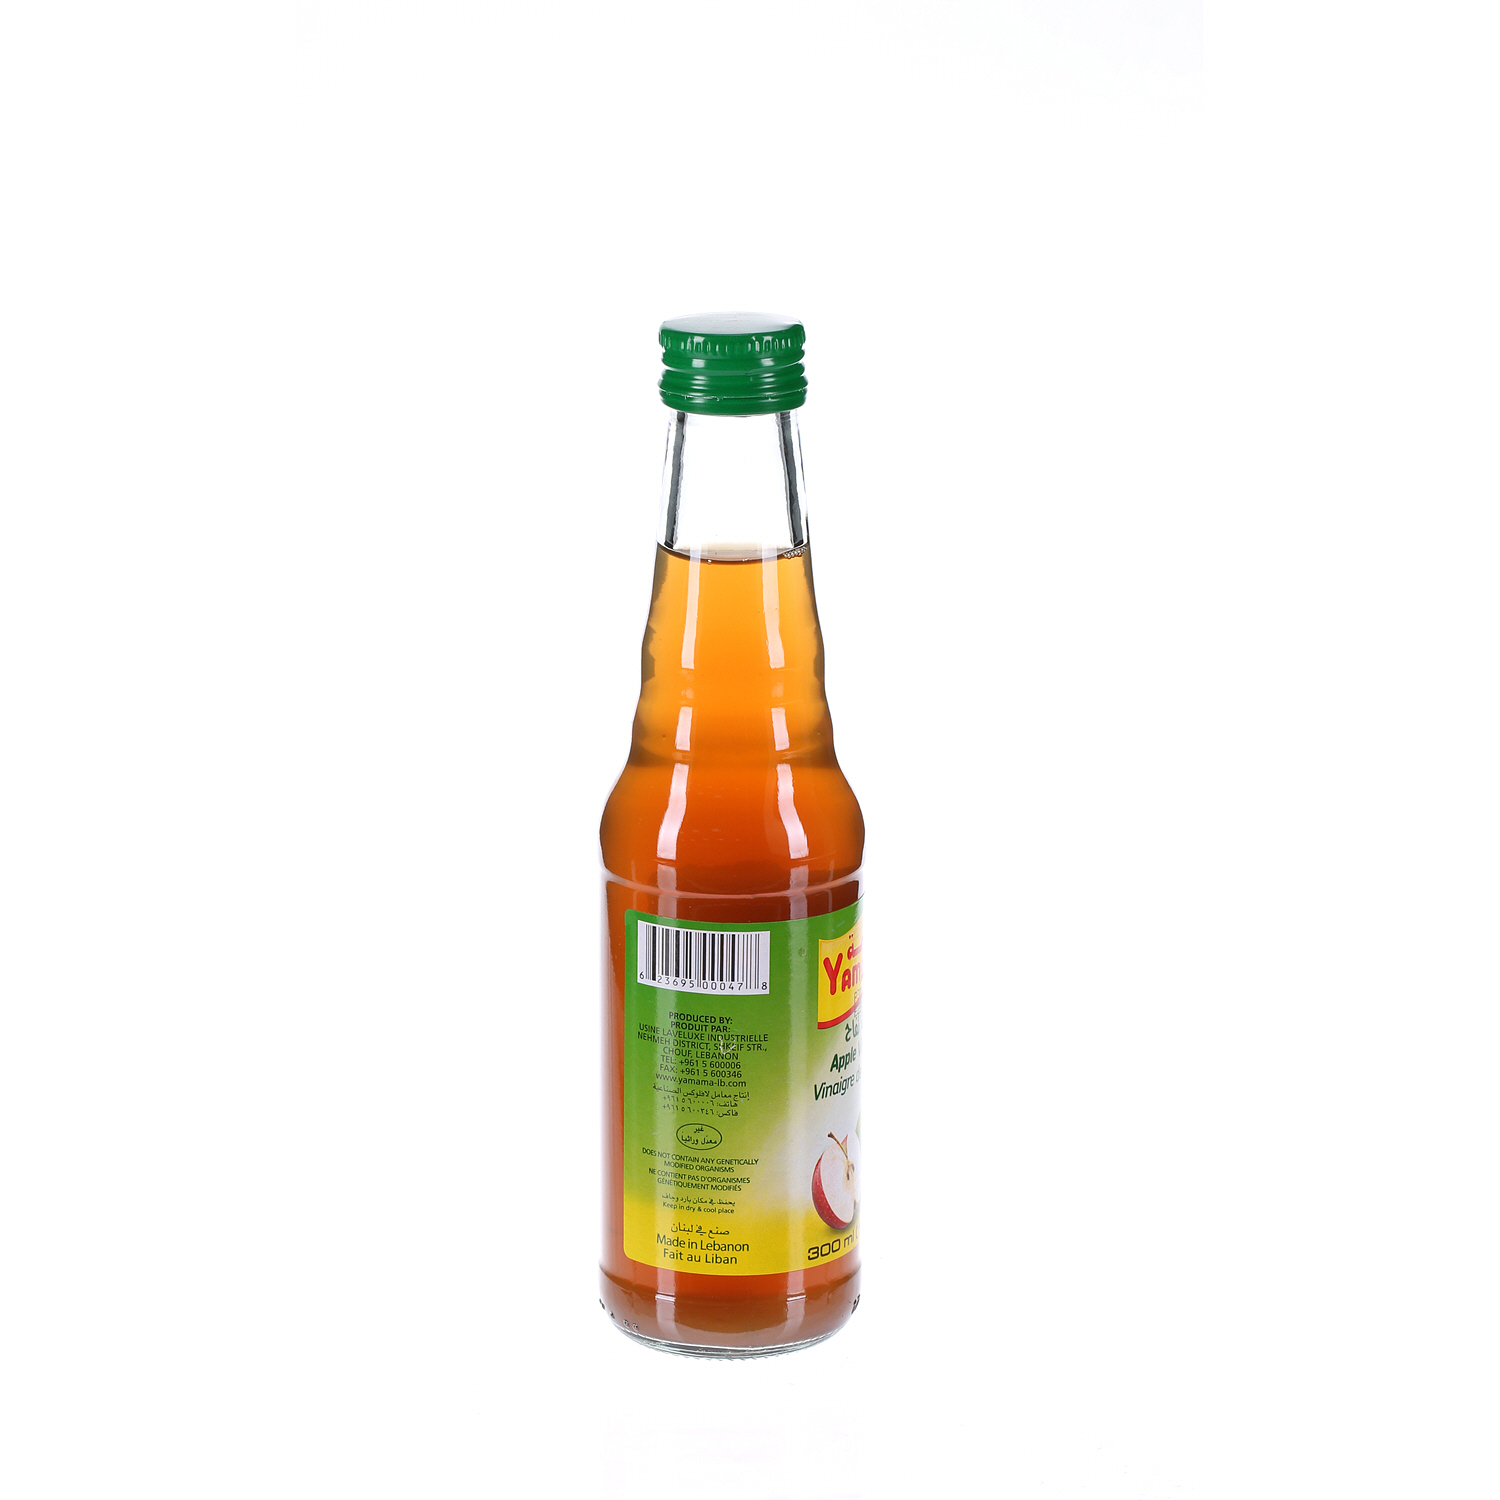 Yamama Cider Vinegar 300ml